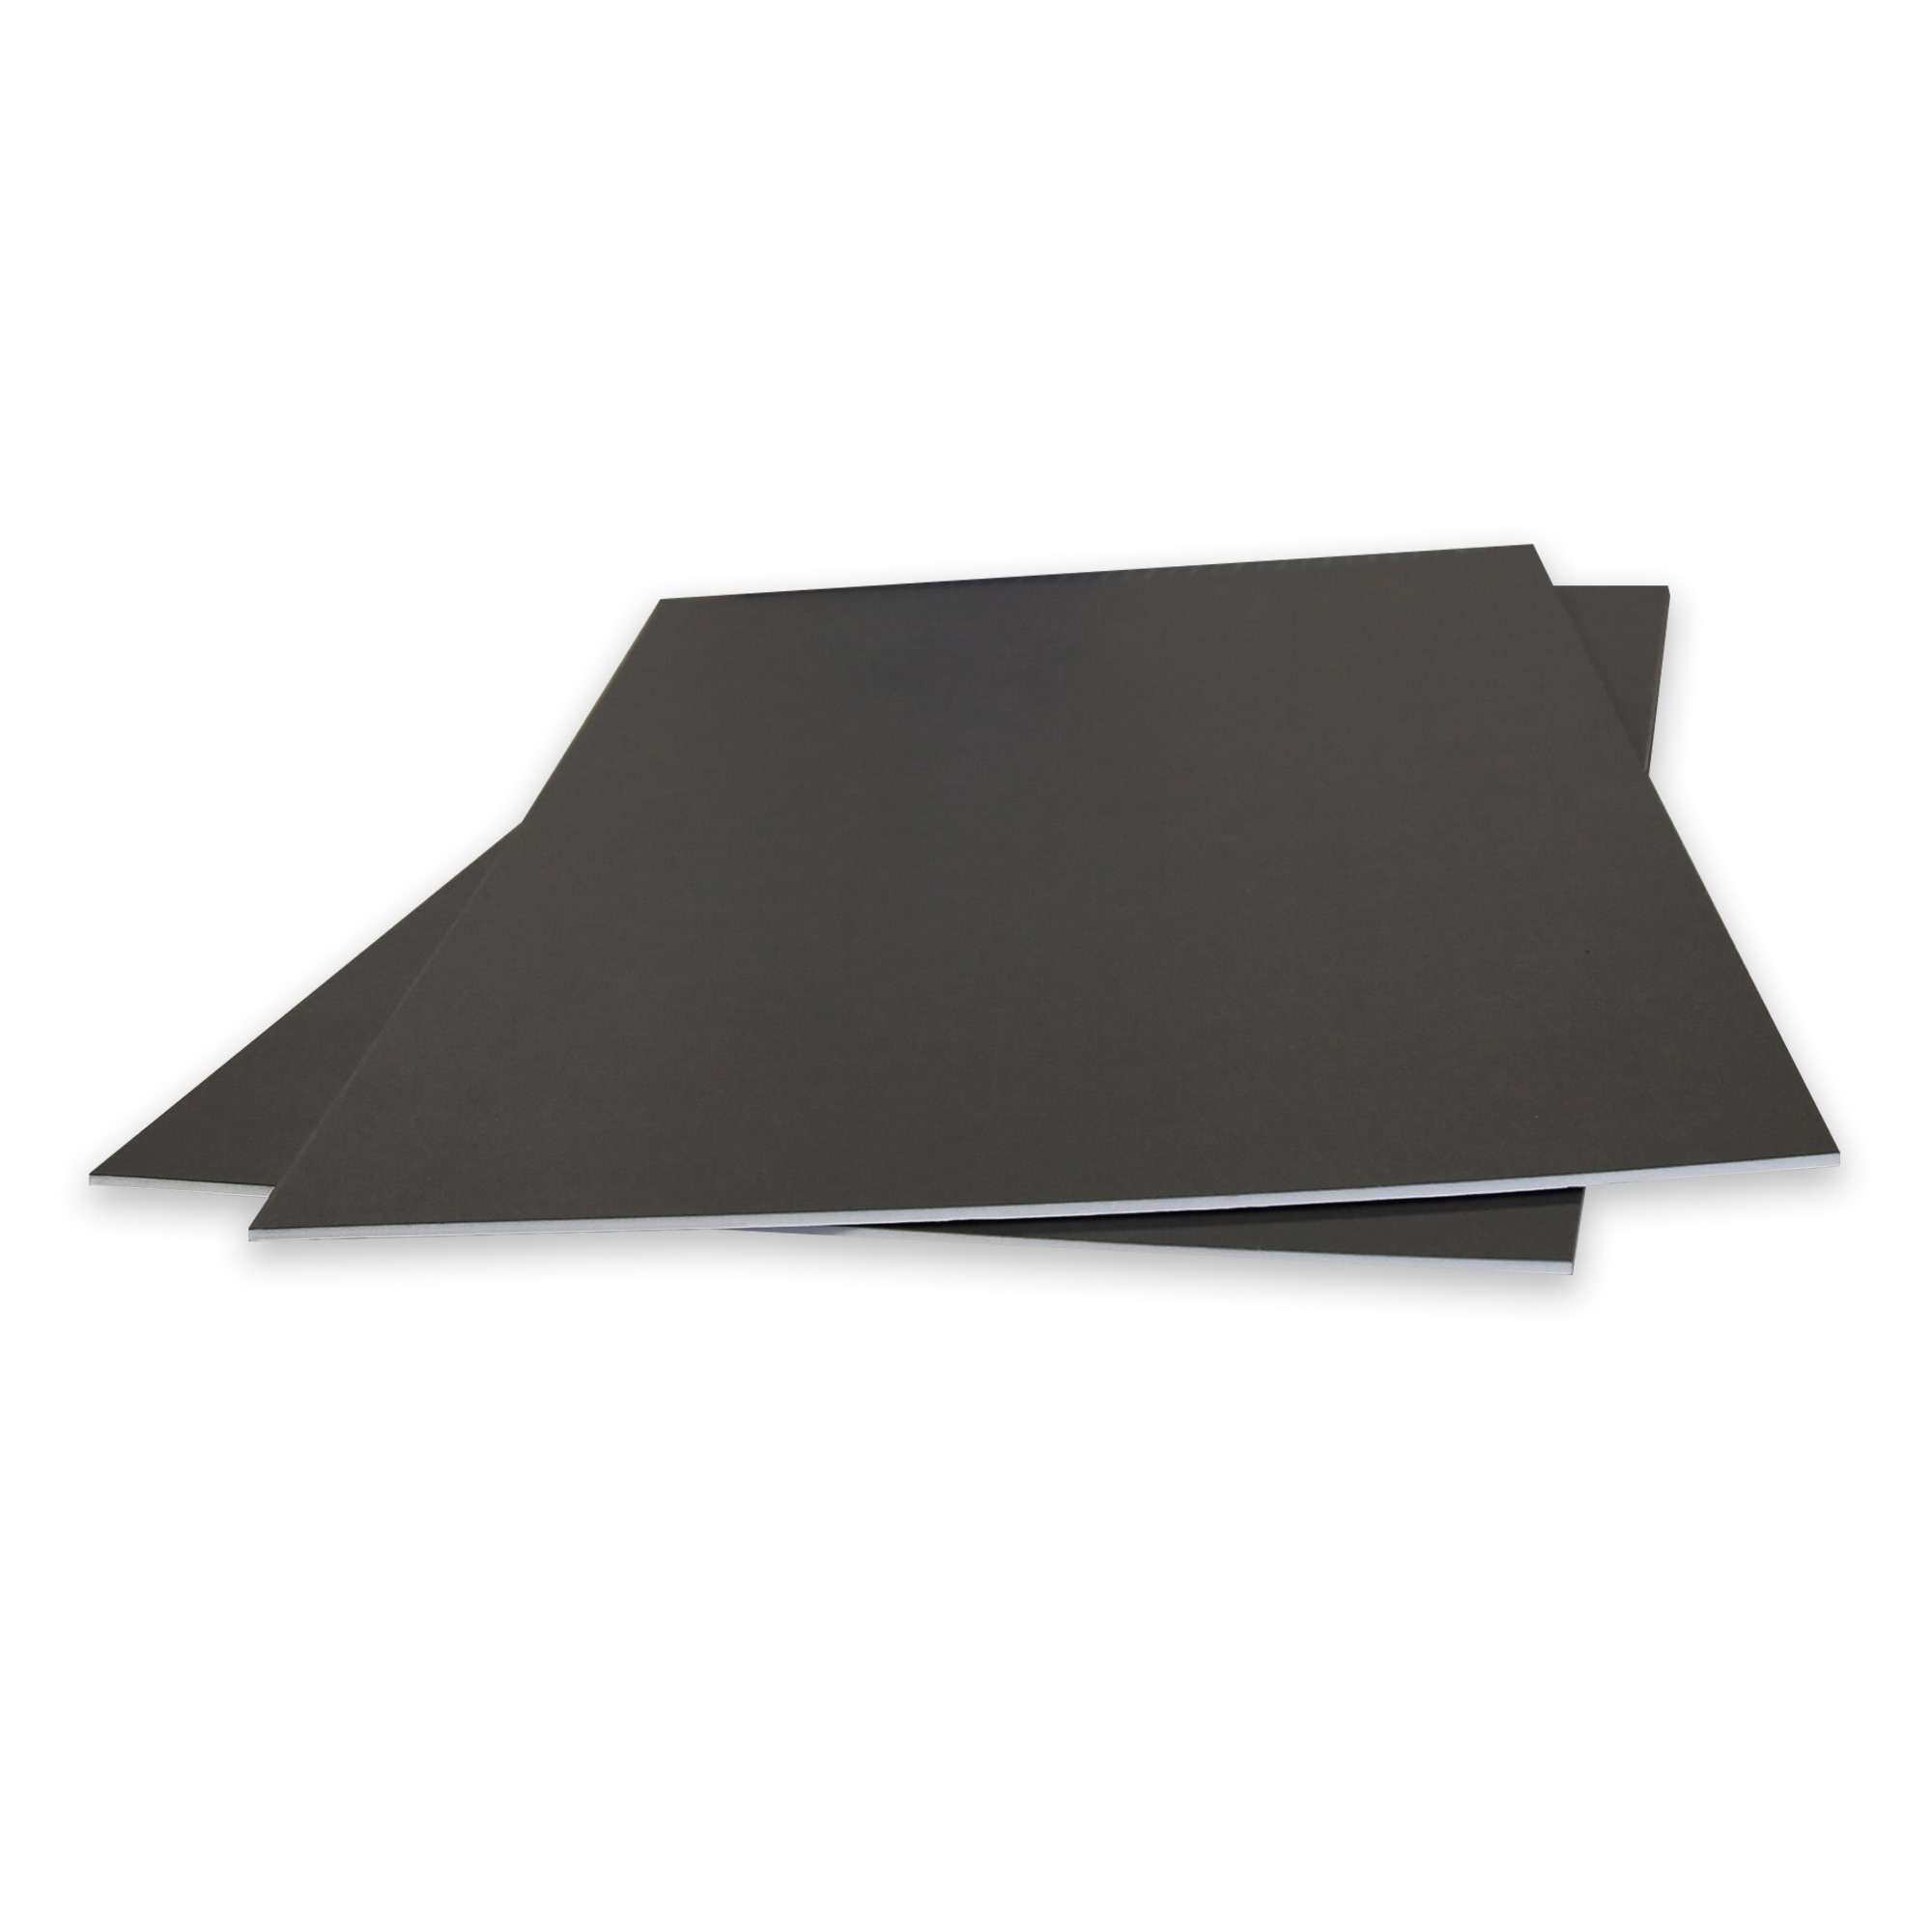 Bazic Products 594 20 x 30 Black Foam Board - Pack of 25